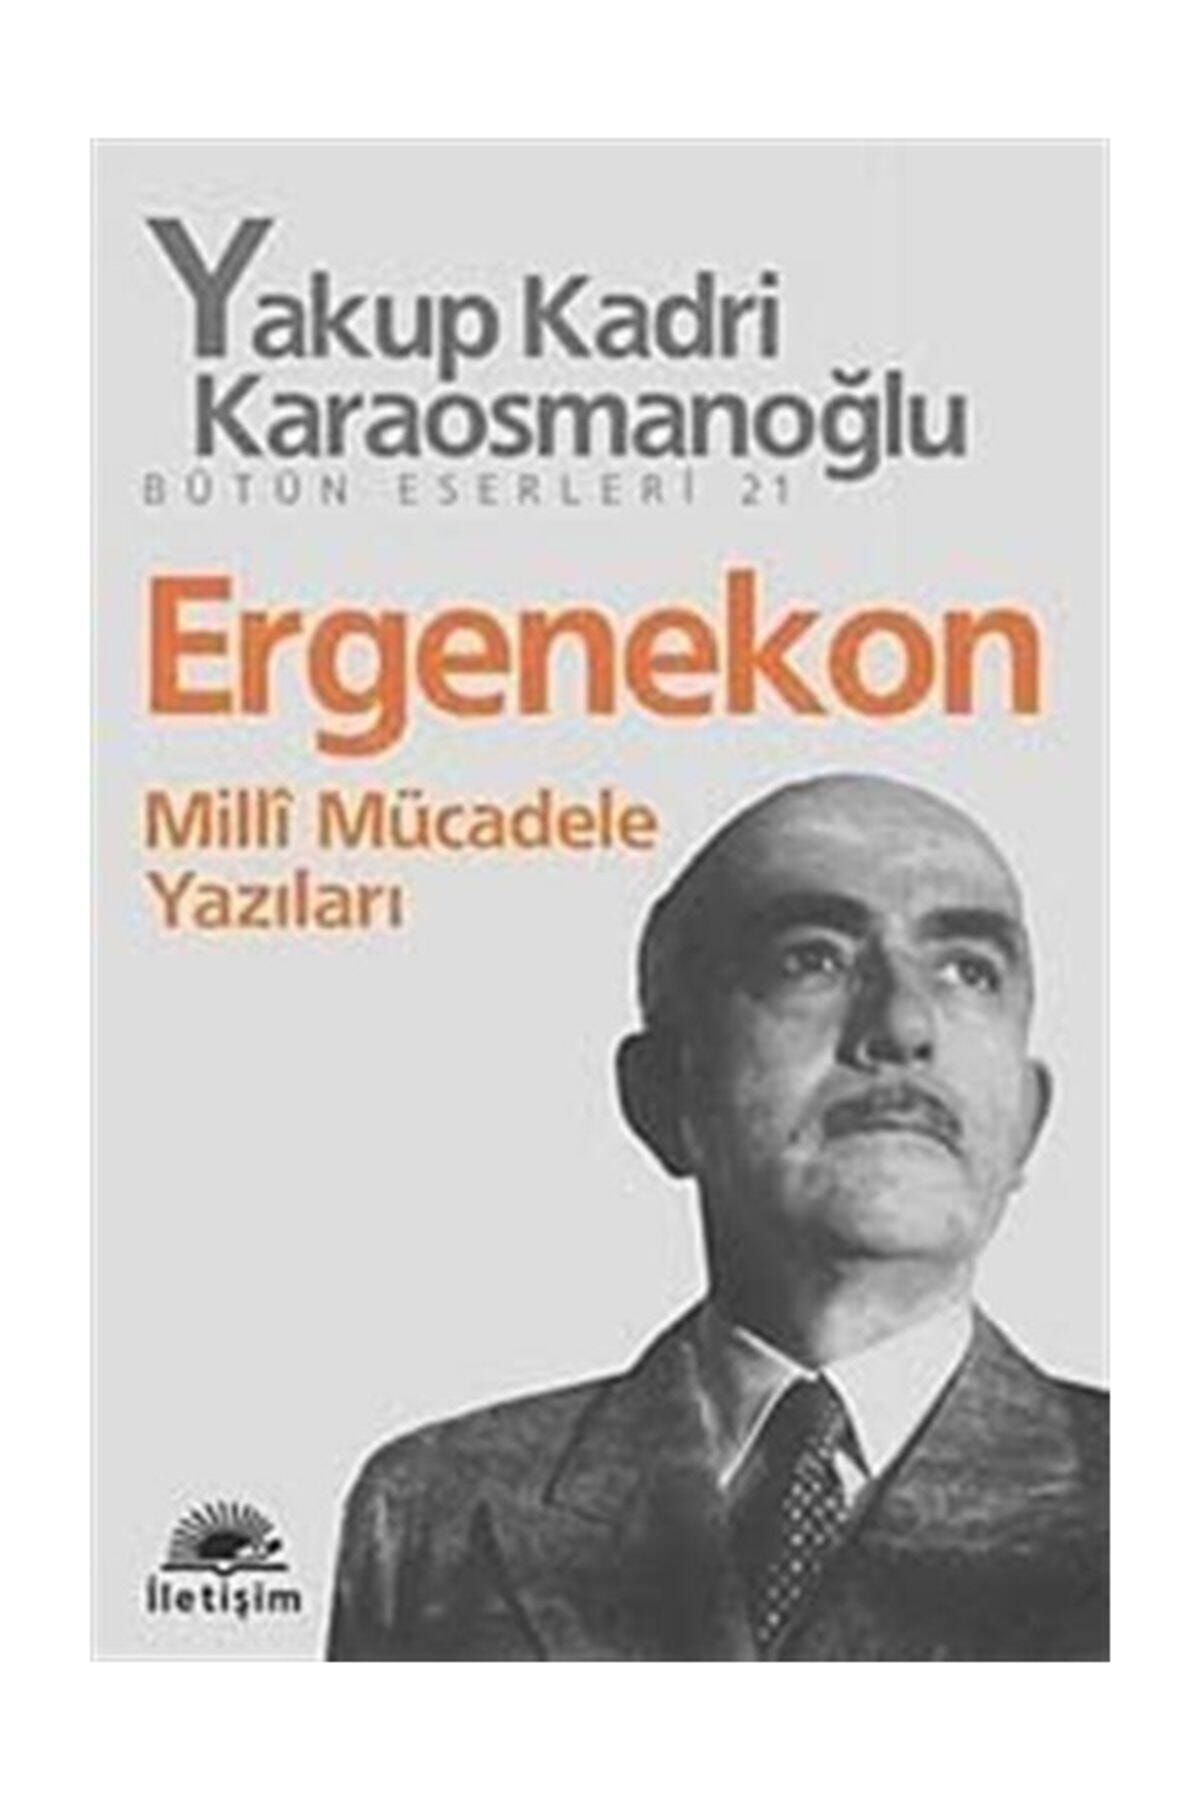 Renato Balestra Ergenekon - Milli Mücadele Yazıları (milli Mücadele Yazıları) - Yakup Kadri Karaosmanoğlu